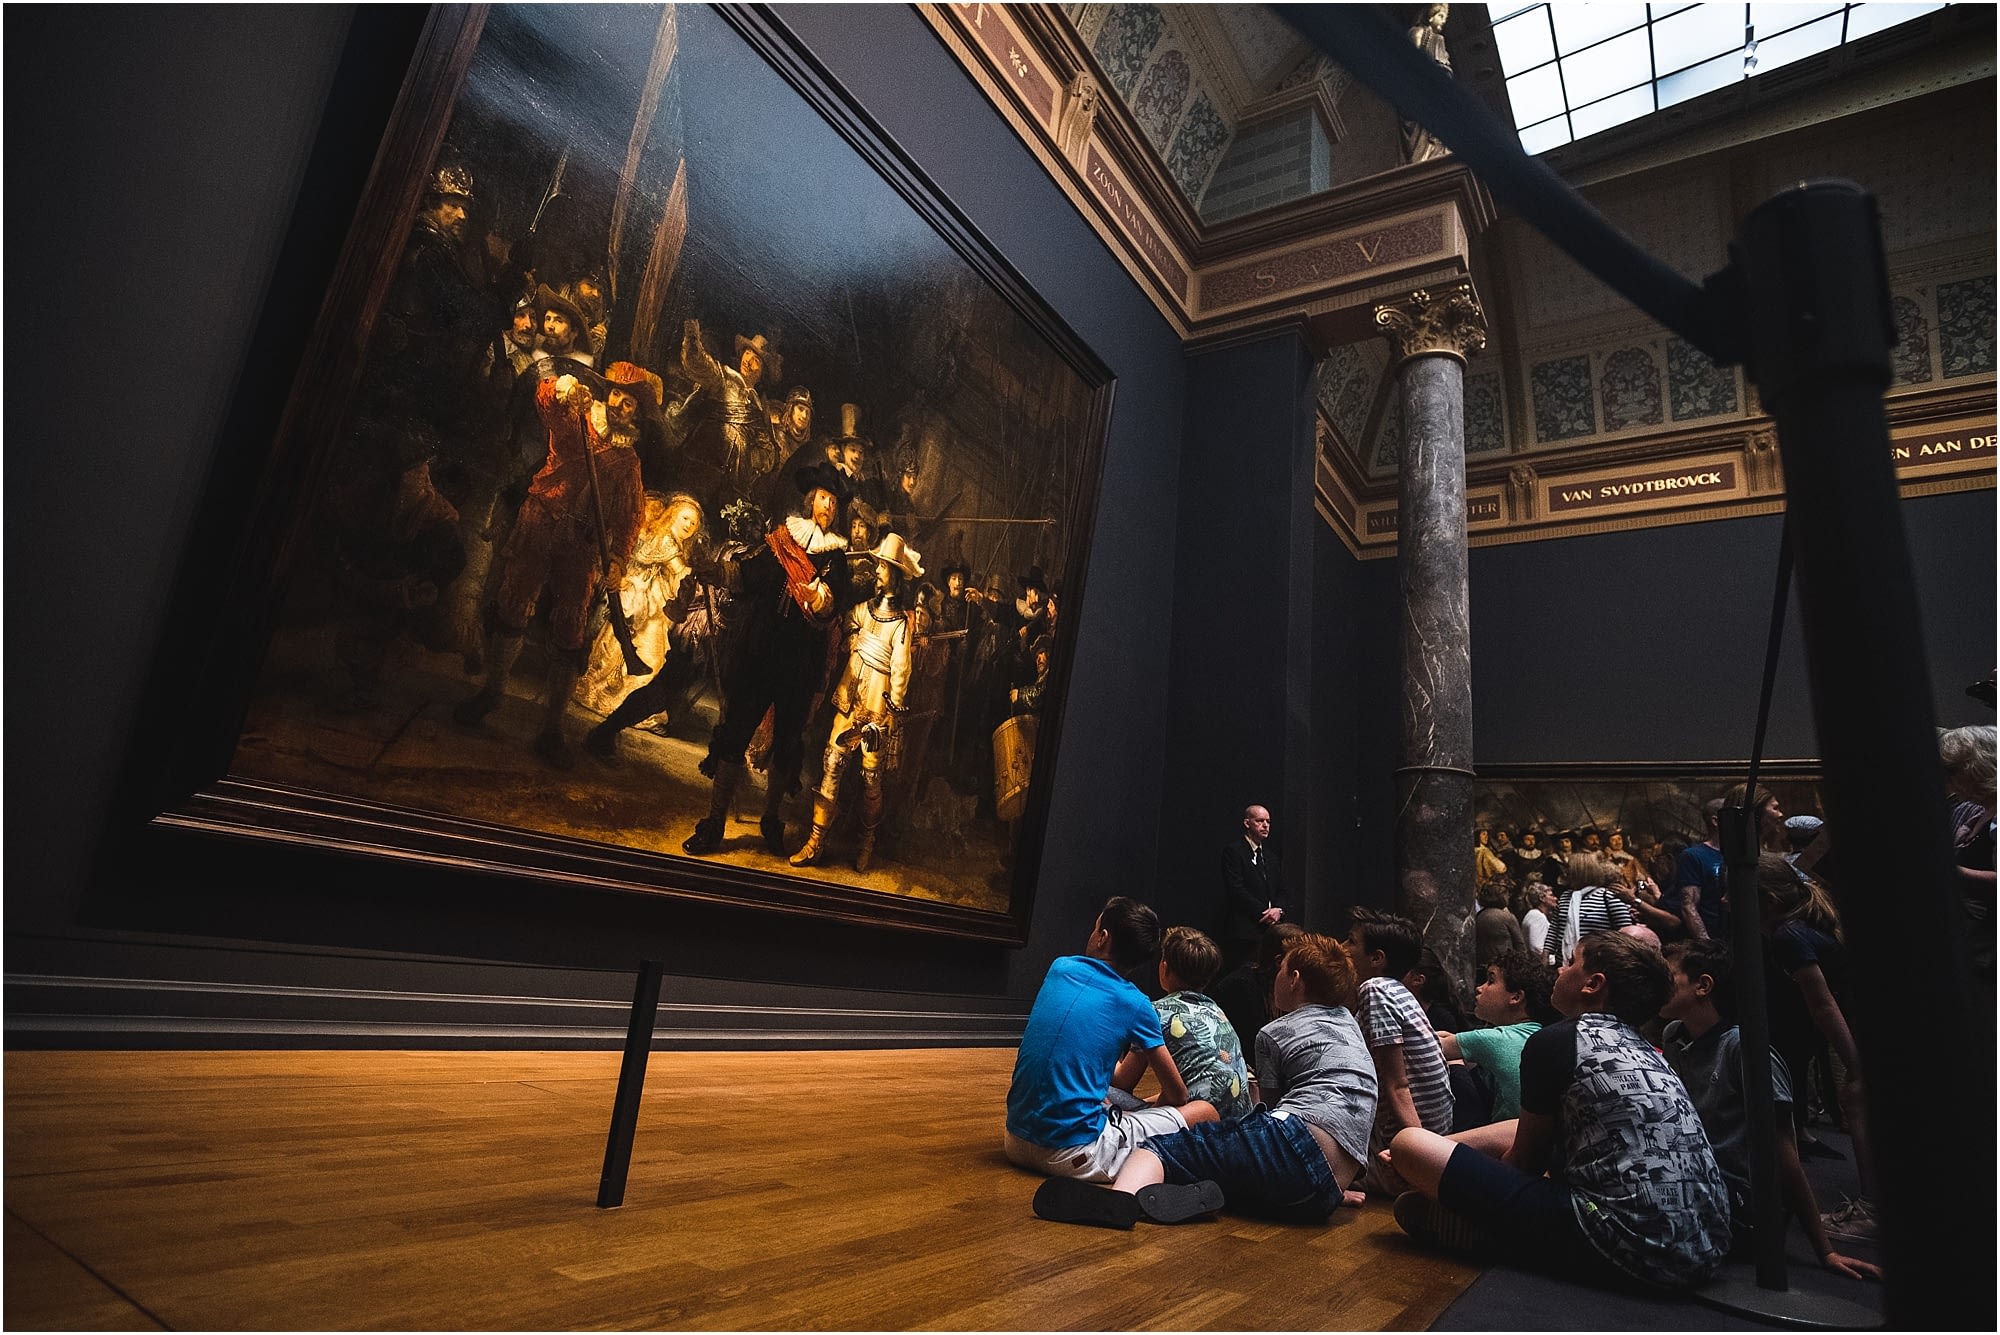 Amsterdam-Rembrandt-Museum